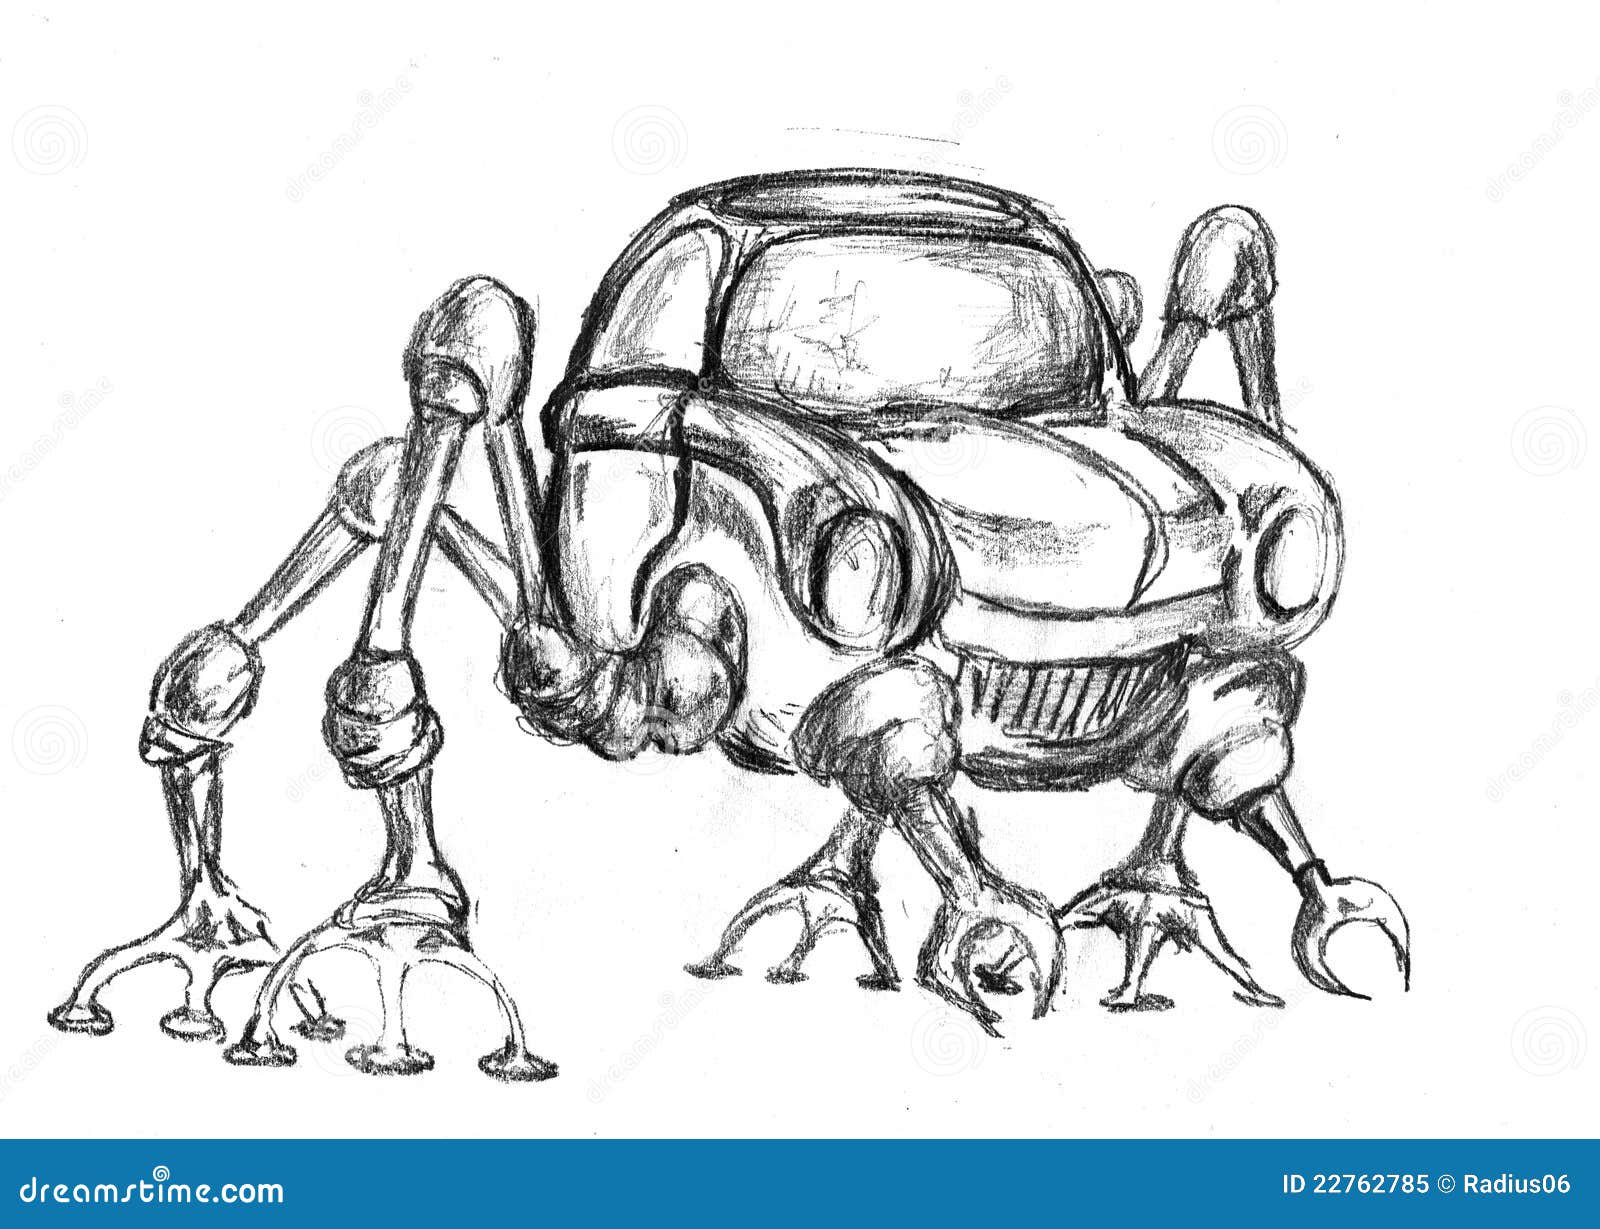 Elementary Cyborg Robot Car (Original Pencil Drawing by ACCI)